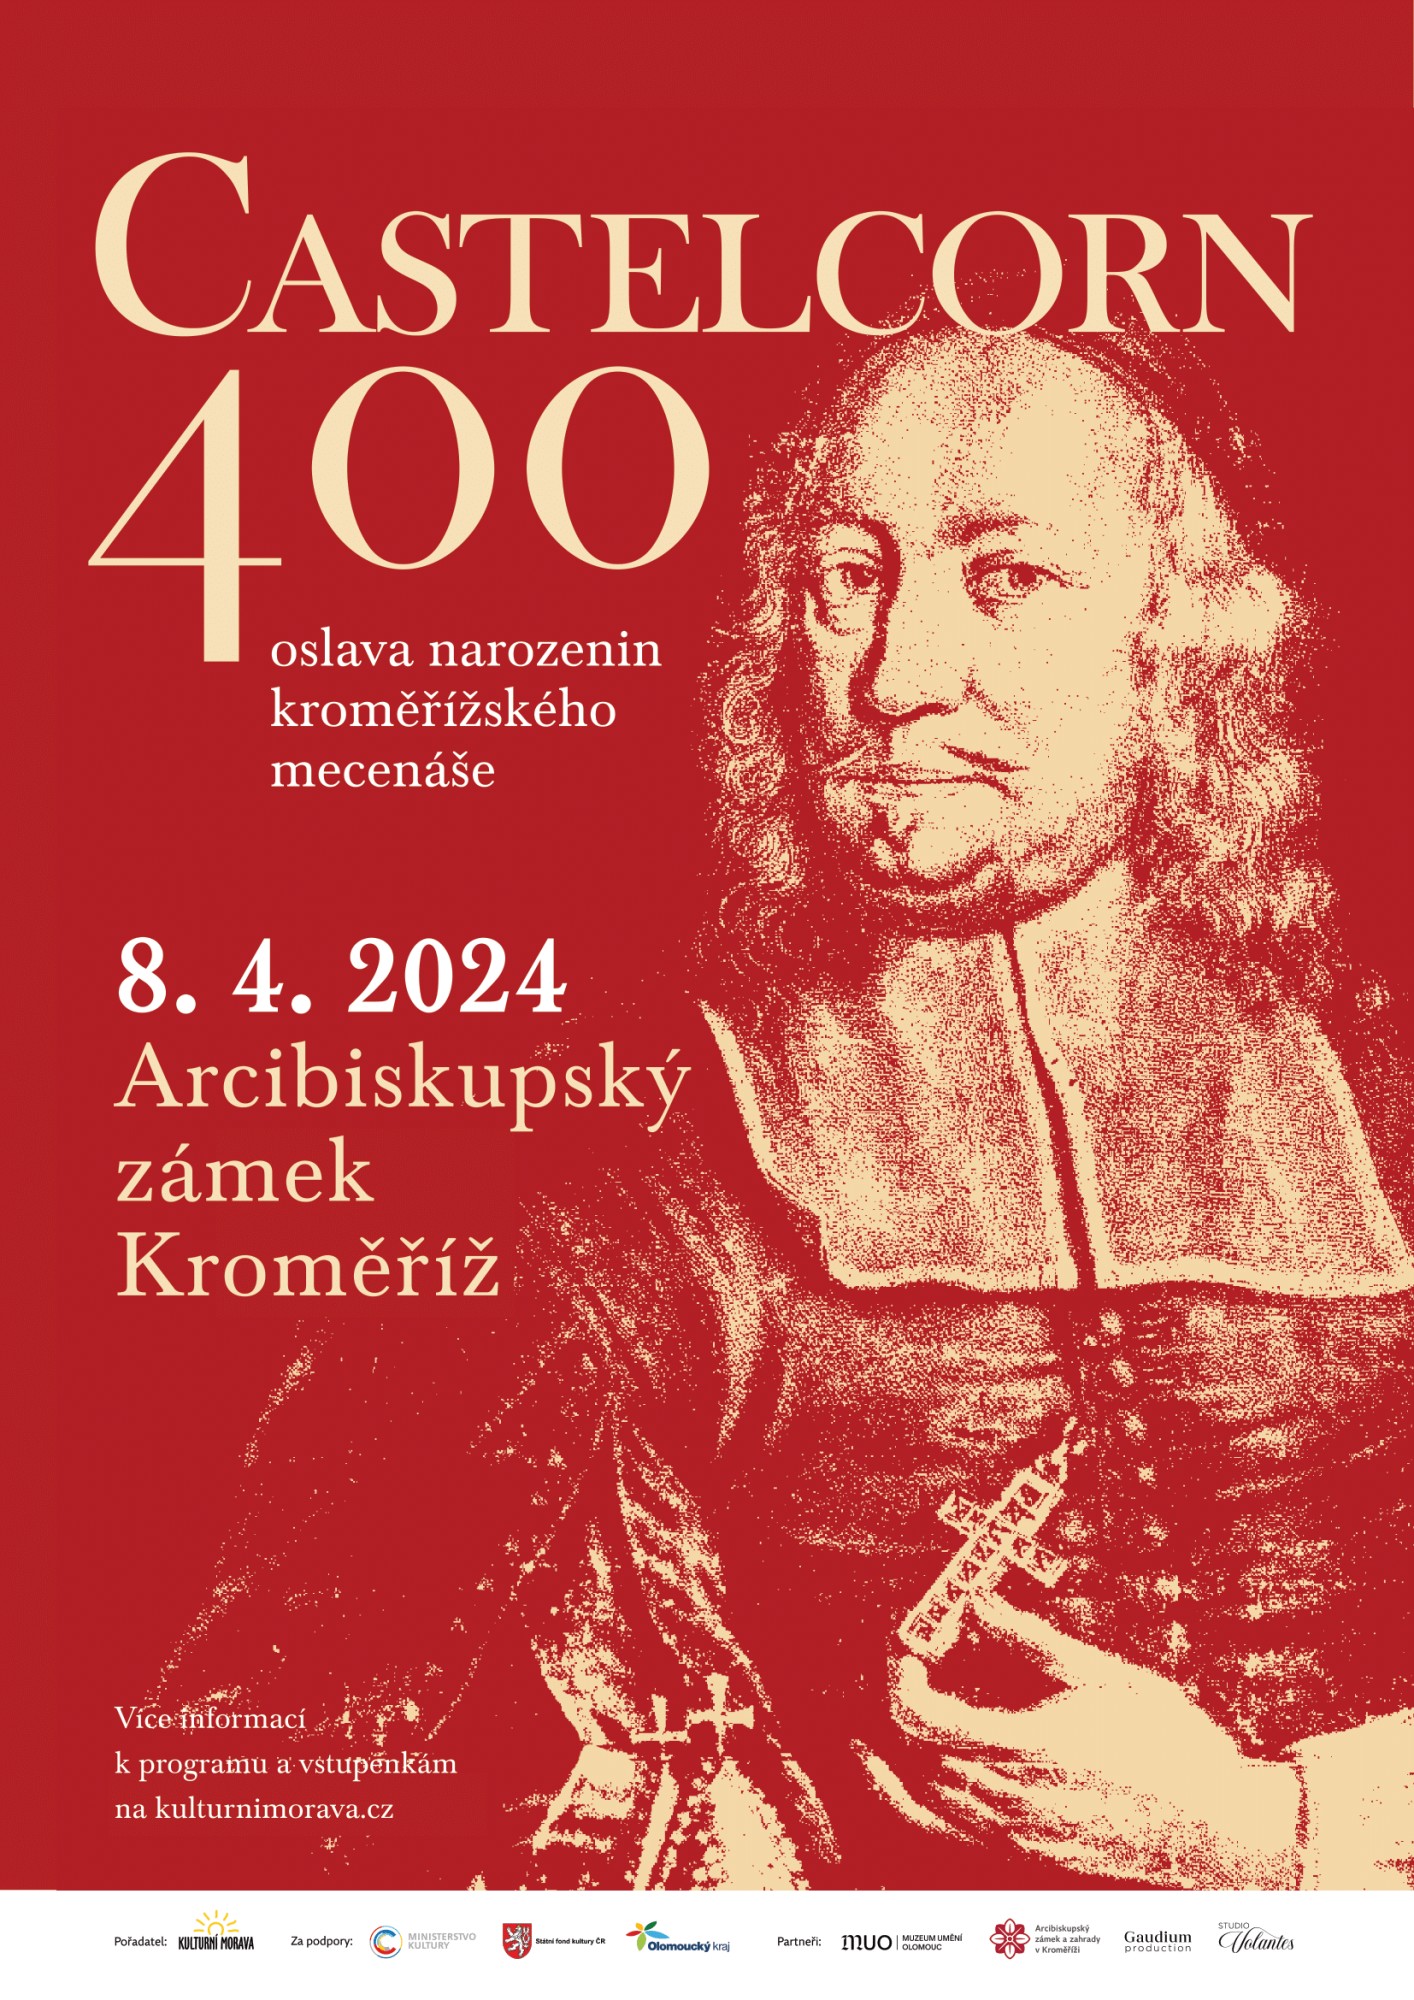 Castelcorn 400